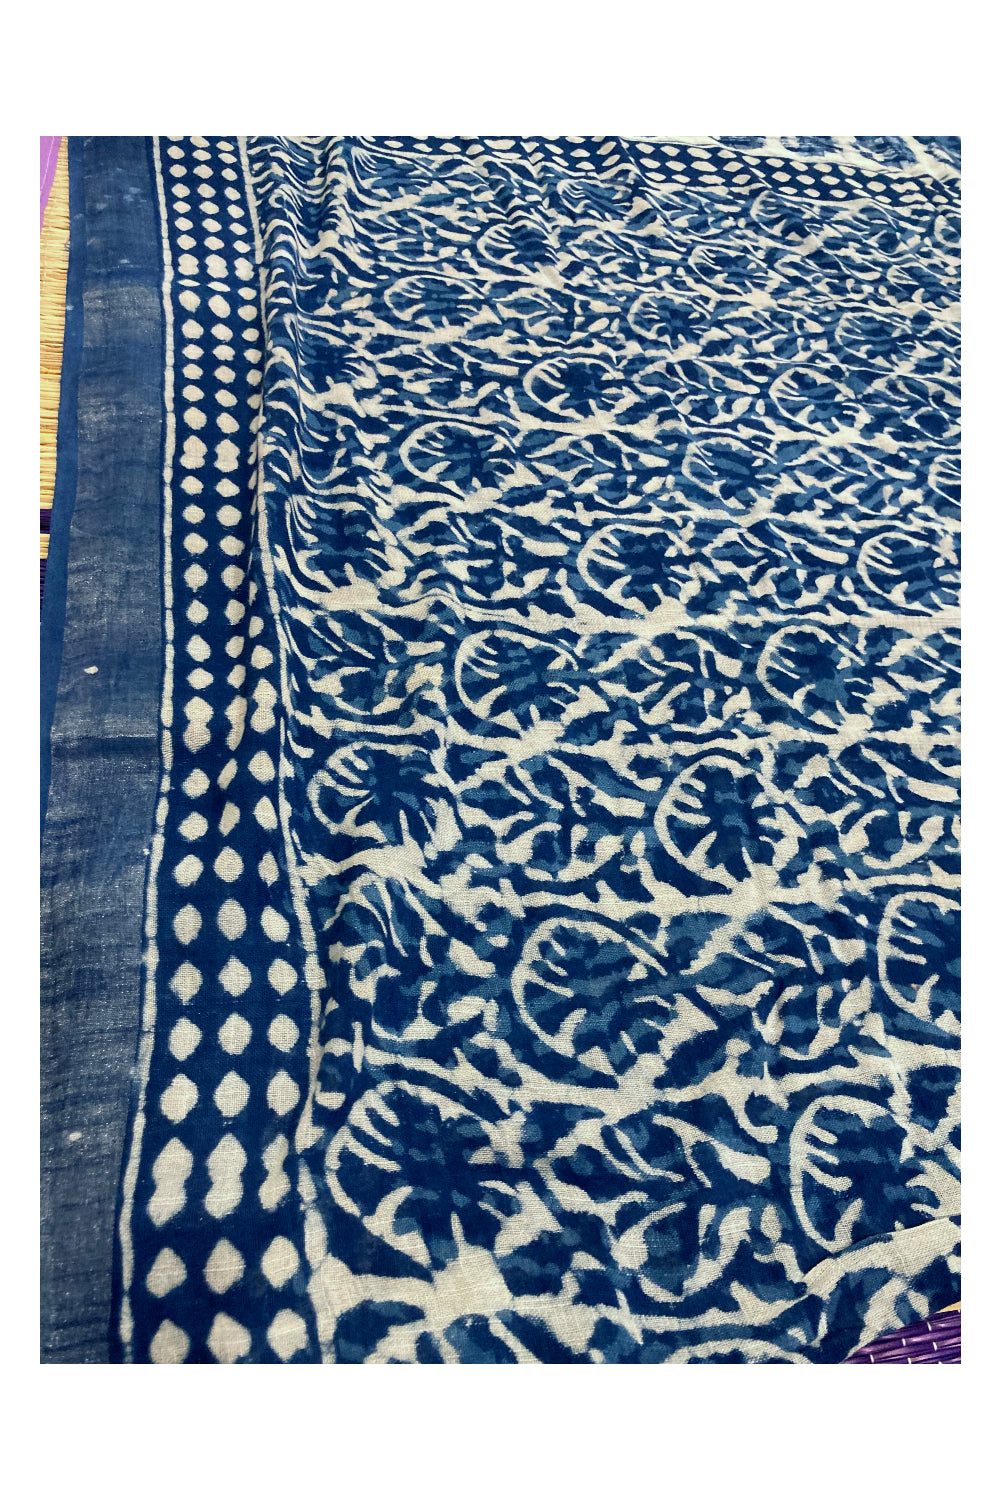 Southloom Linen Indigo Blue Saree with White Designer Prints and Tassels on Pallu